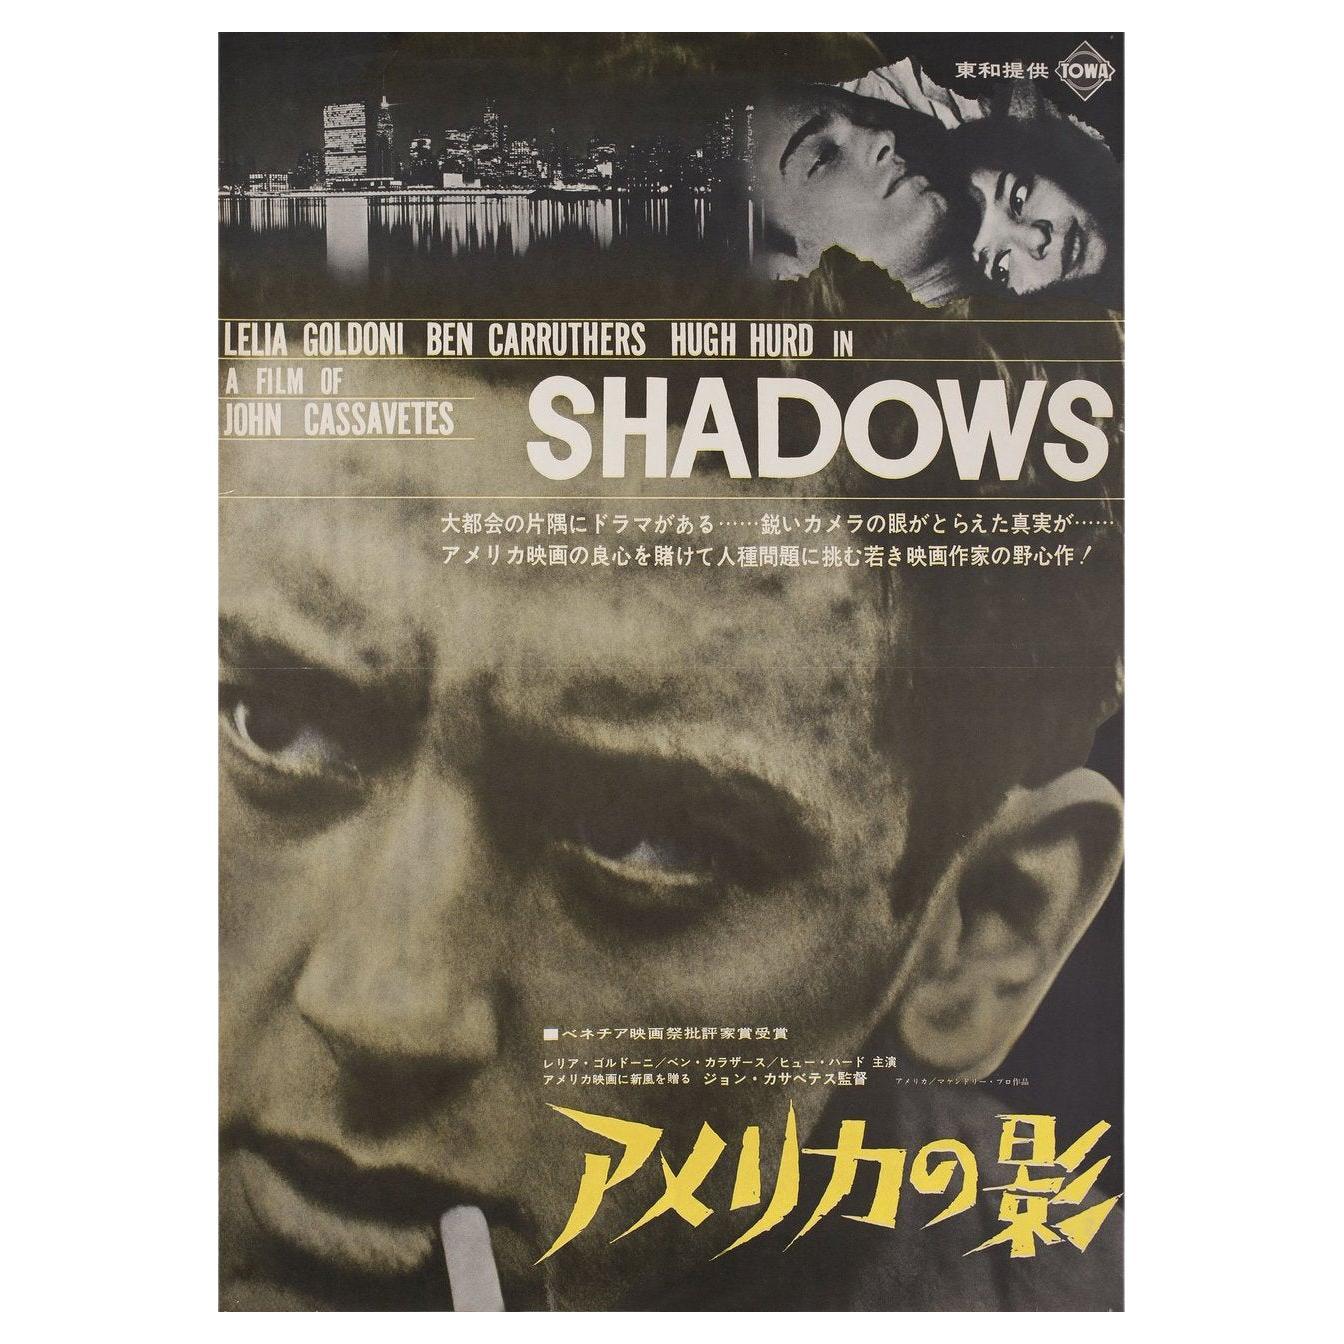 Shadows, 1959, Japanisches B2-Filmplakat